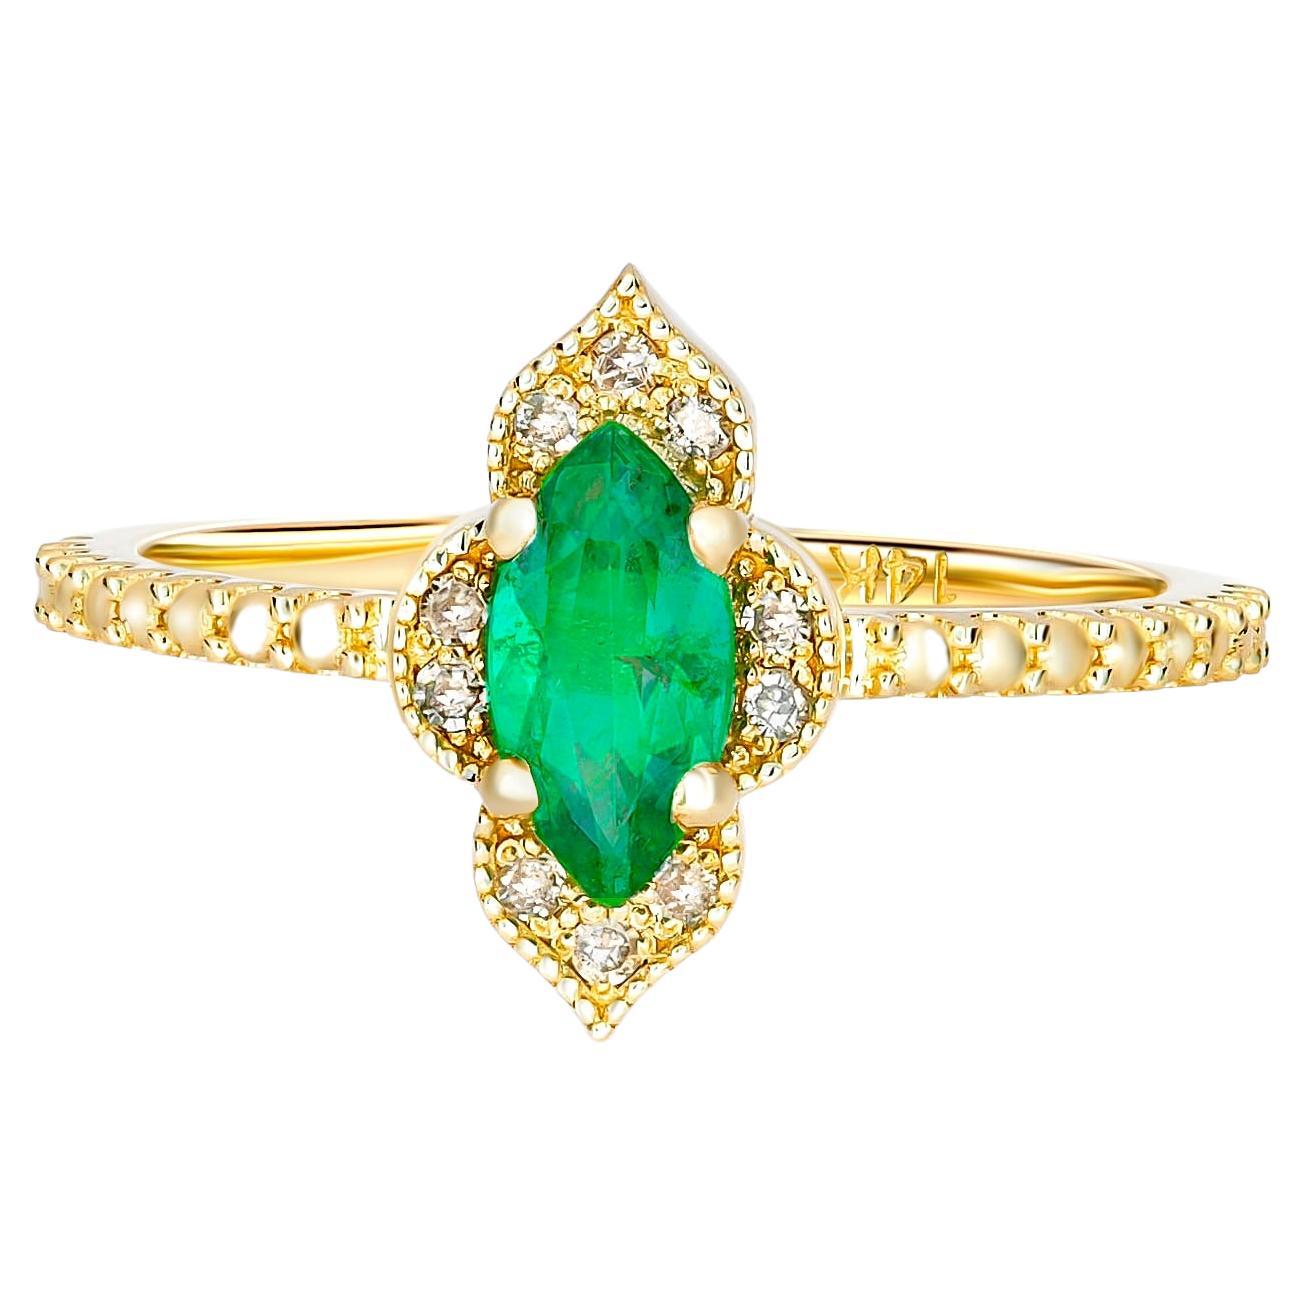 Smaragd 14k Gold Ring. 